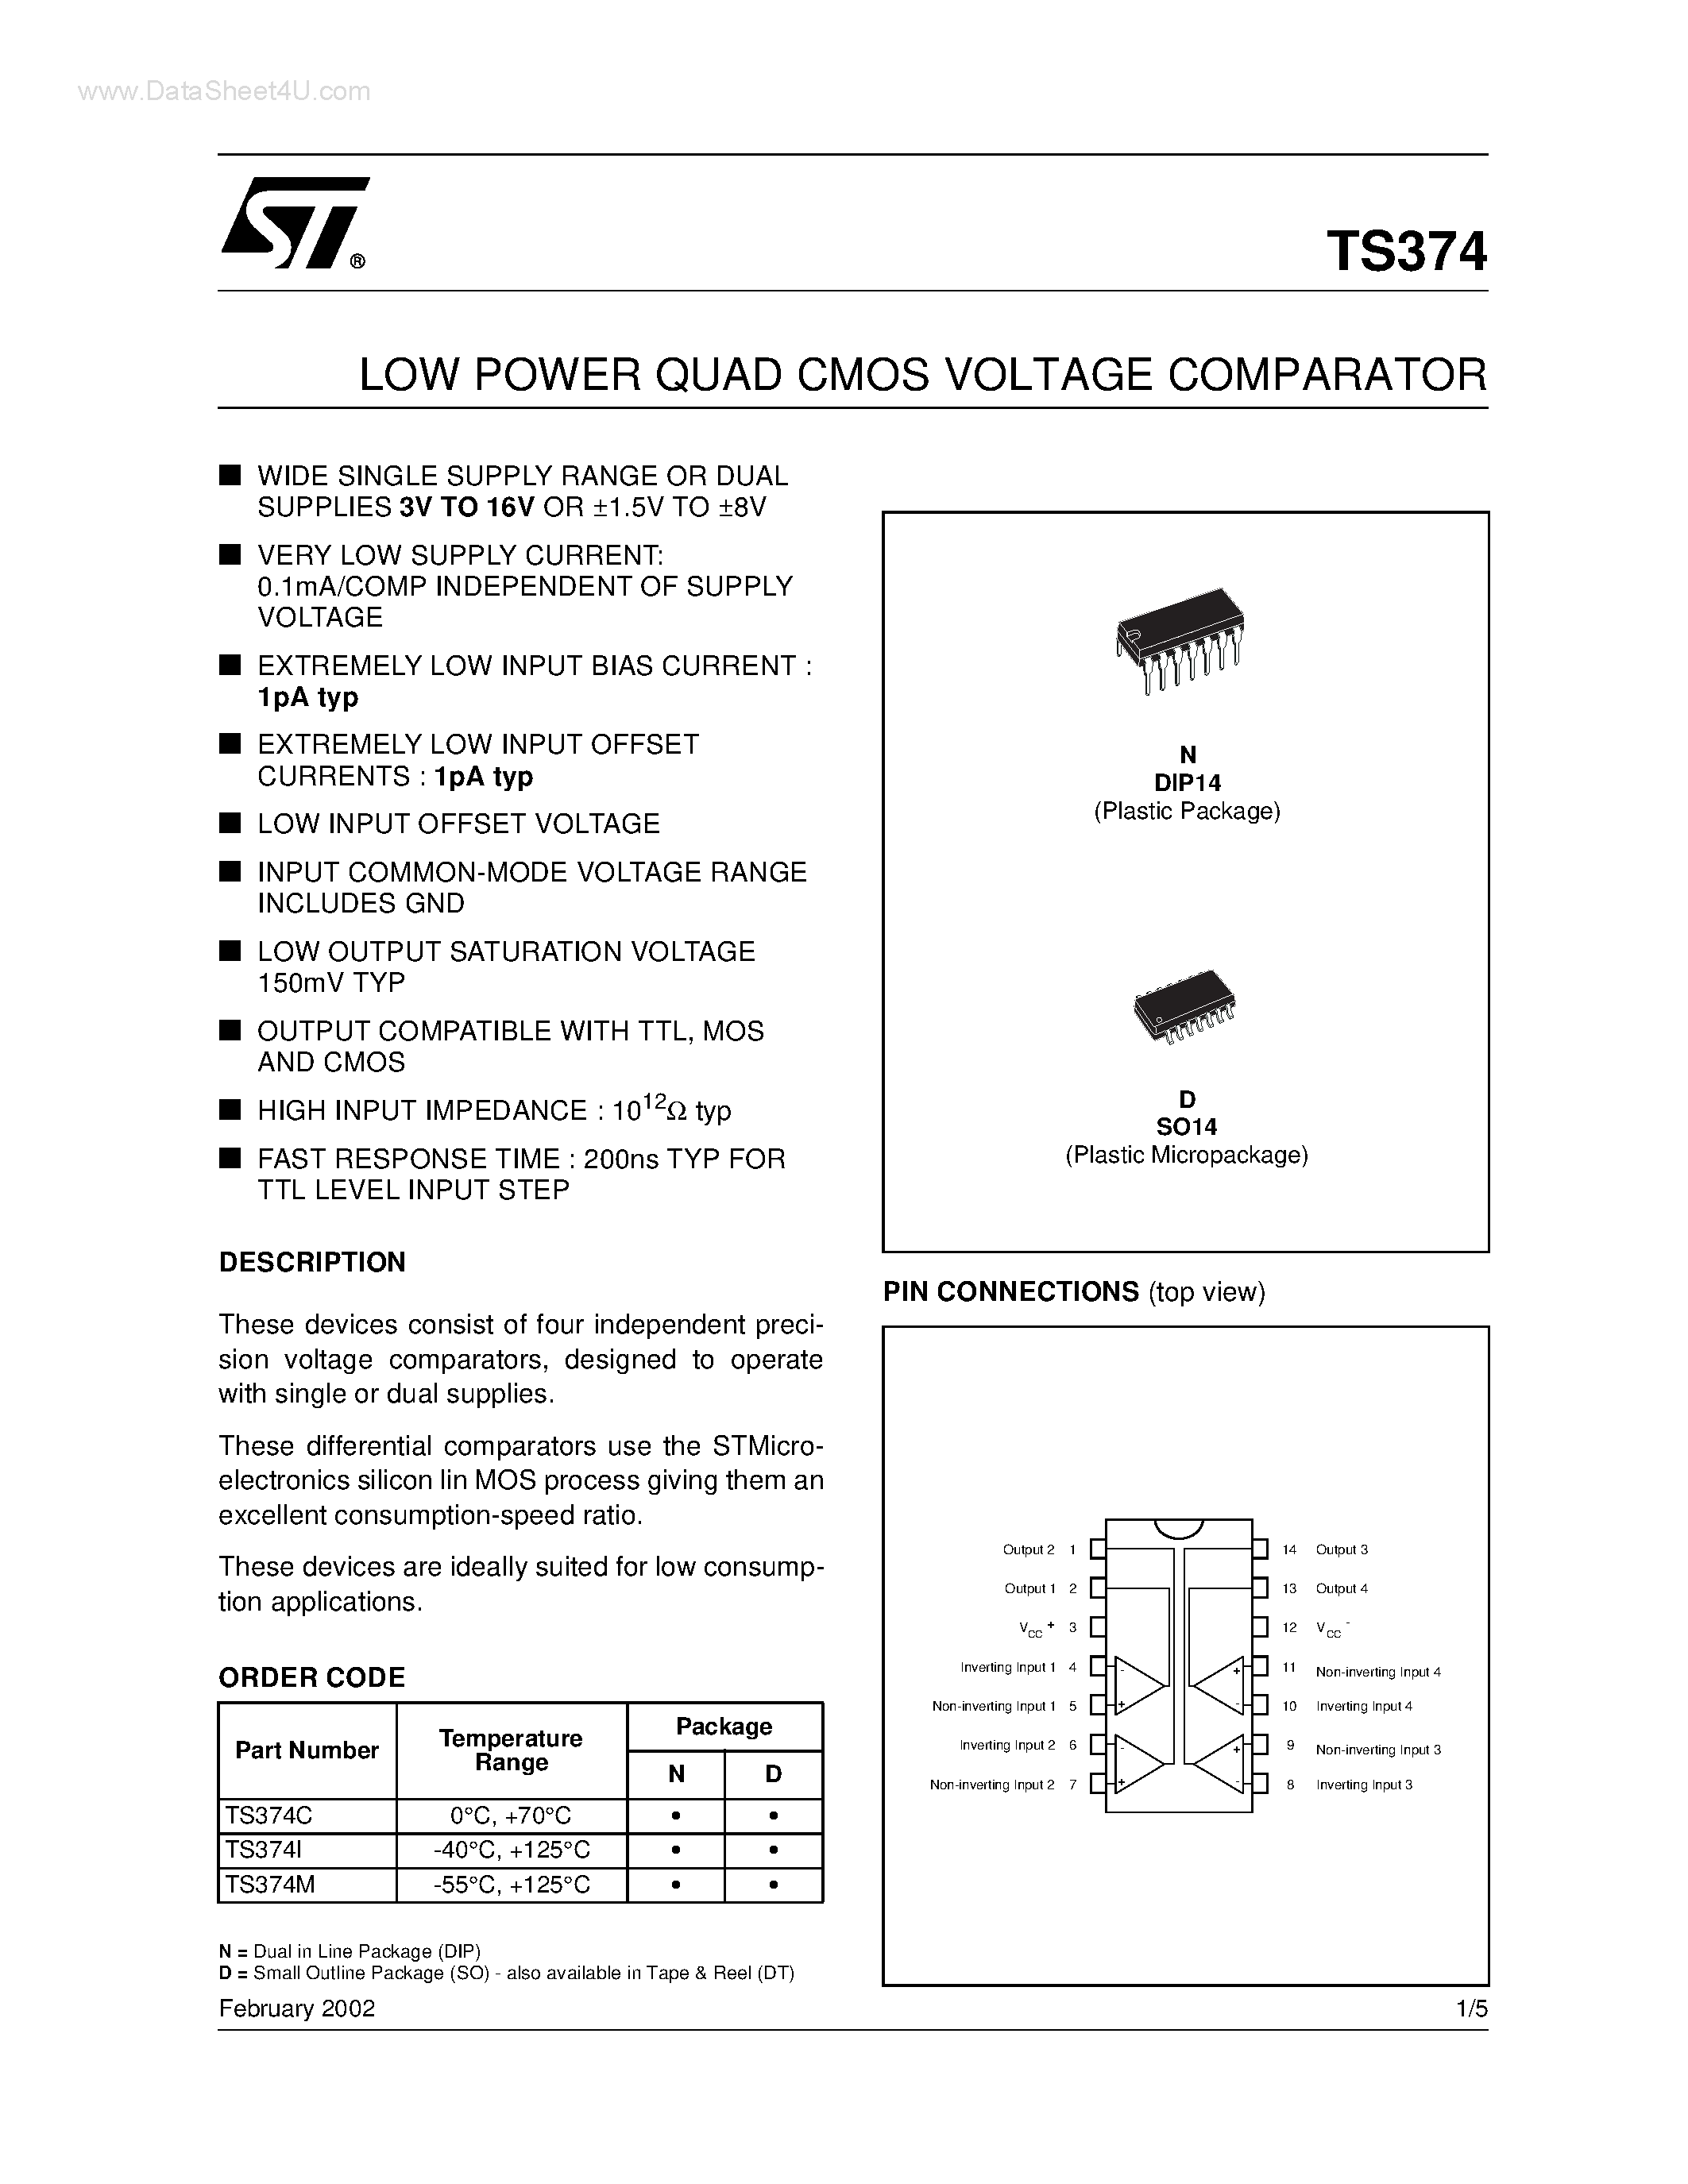 Даташит TS374 - LOW POWER QUAD CMOS VOLTAGE COMPARATOR страница 1